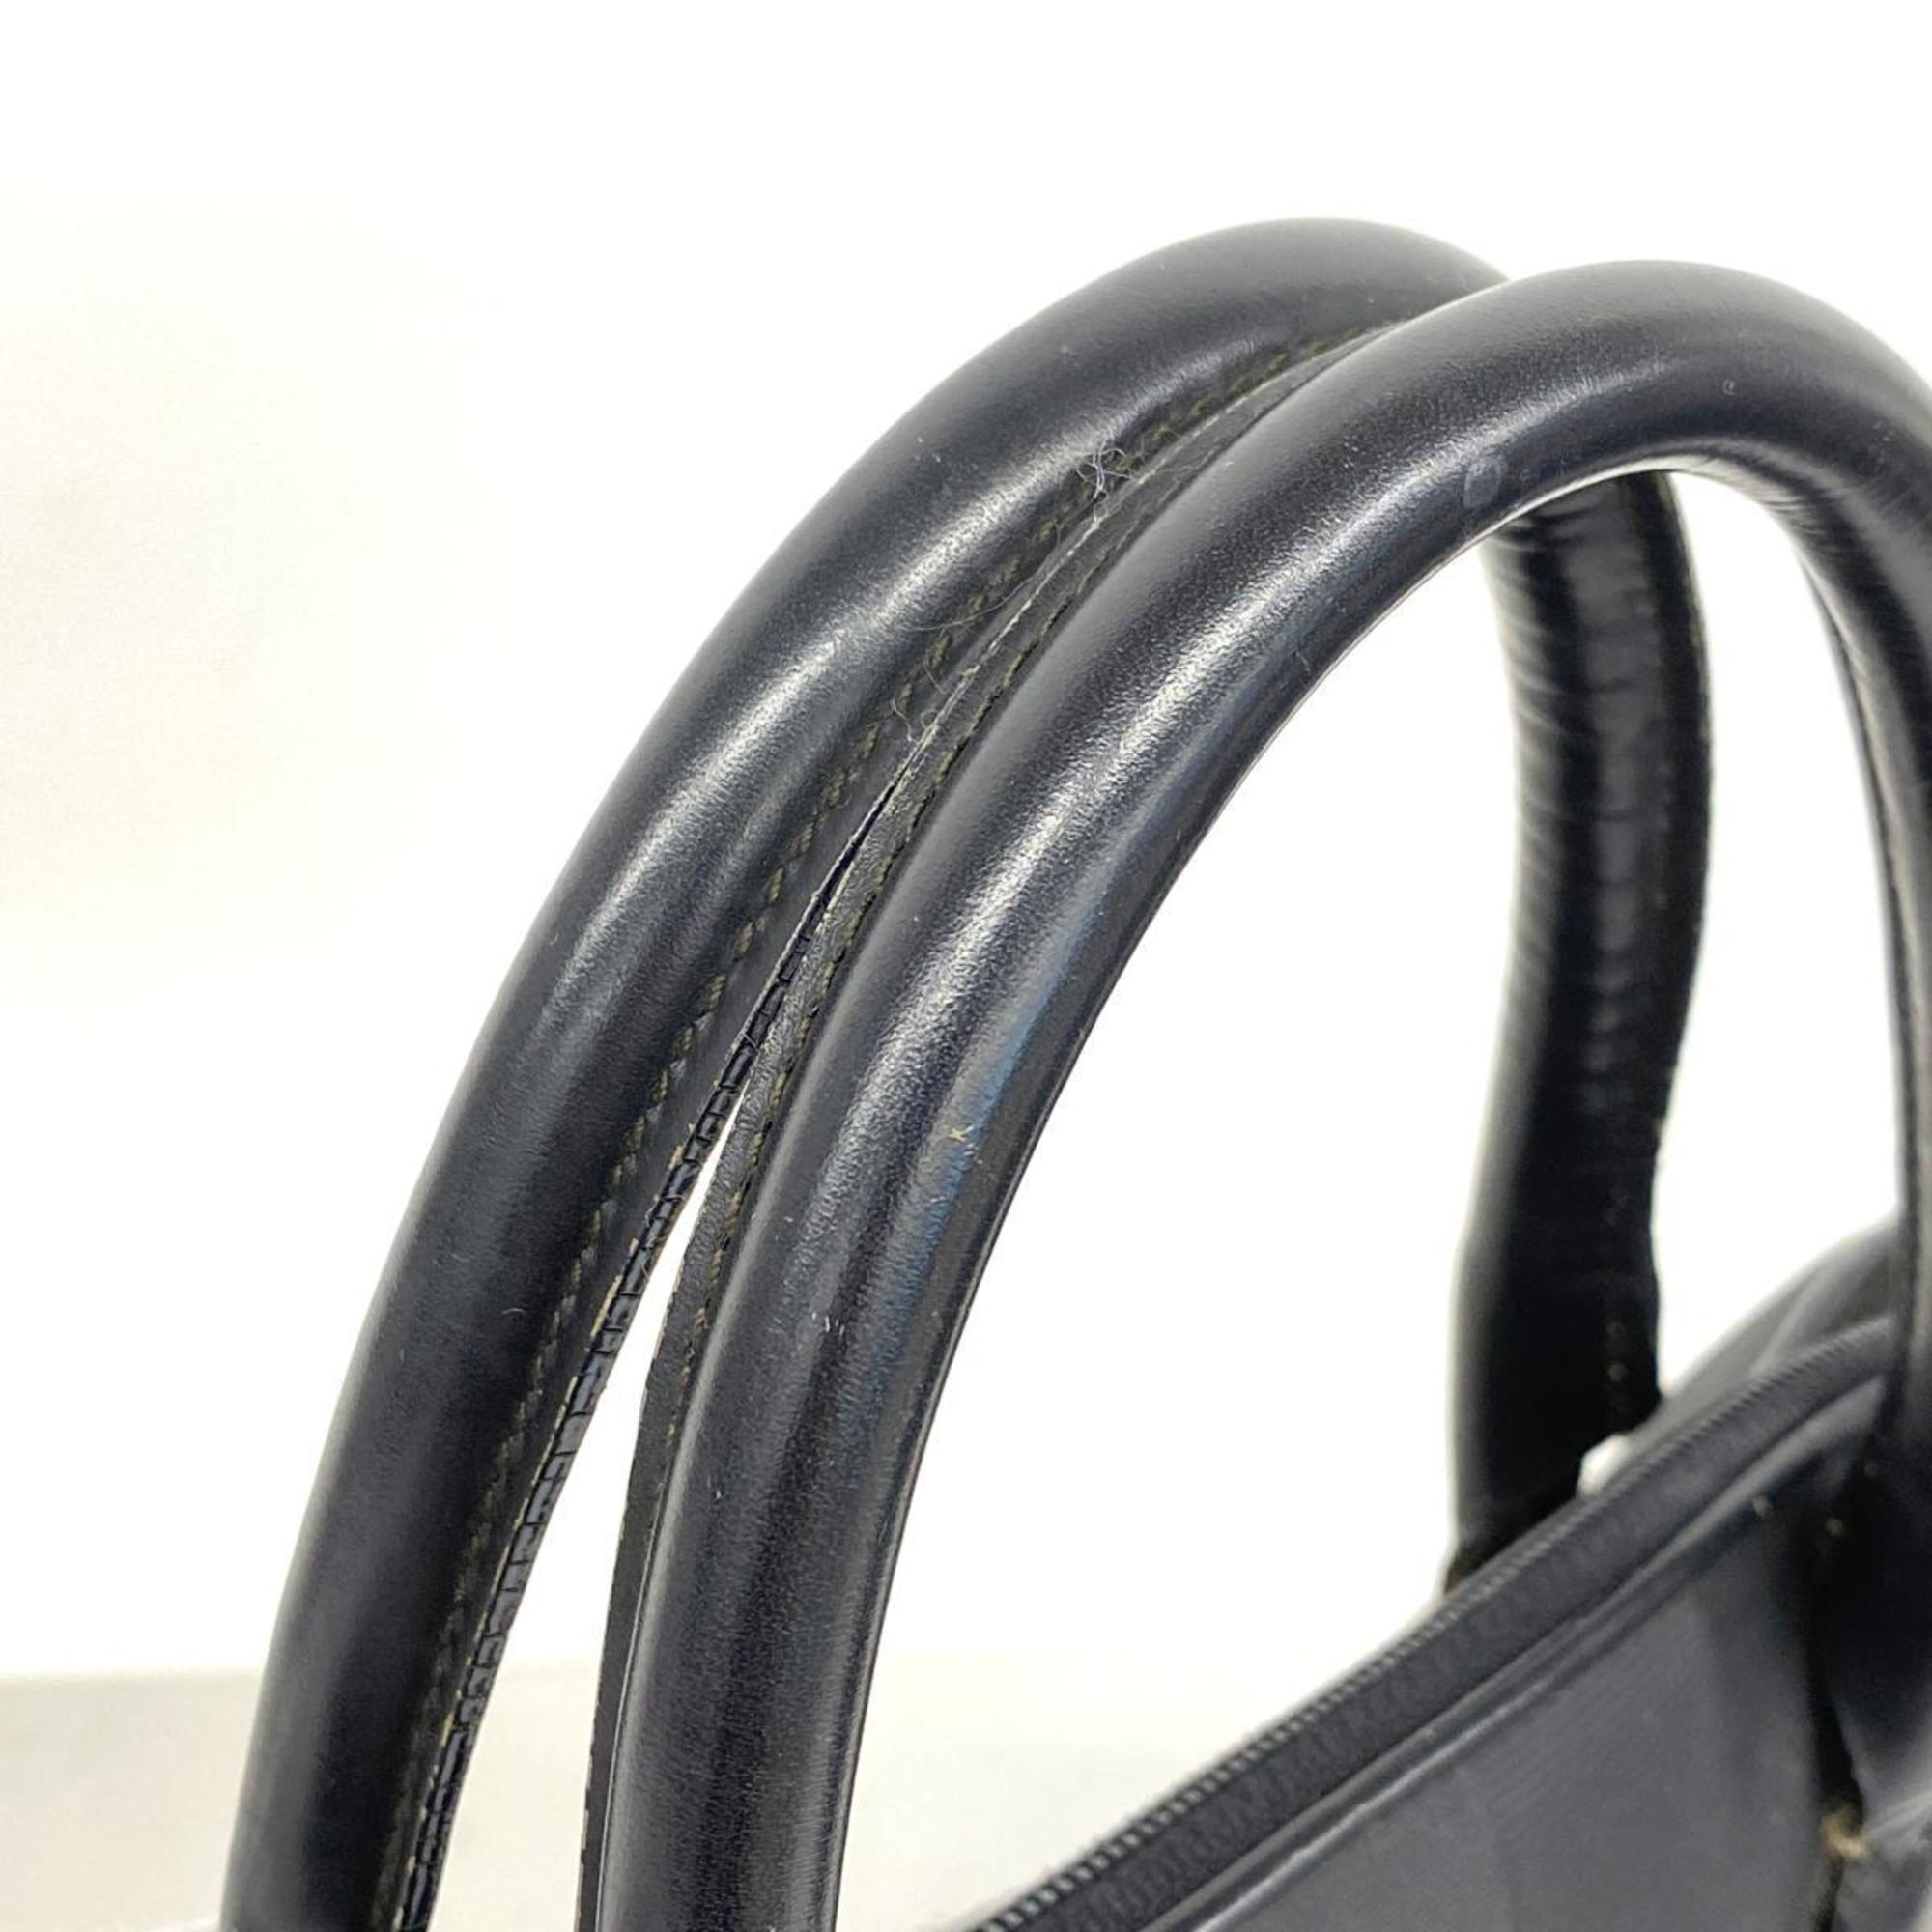 Fendi handbag pecan leather black ladies